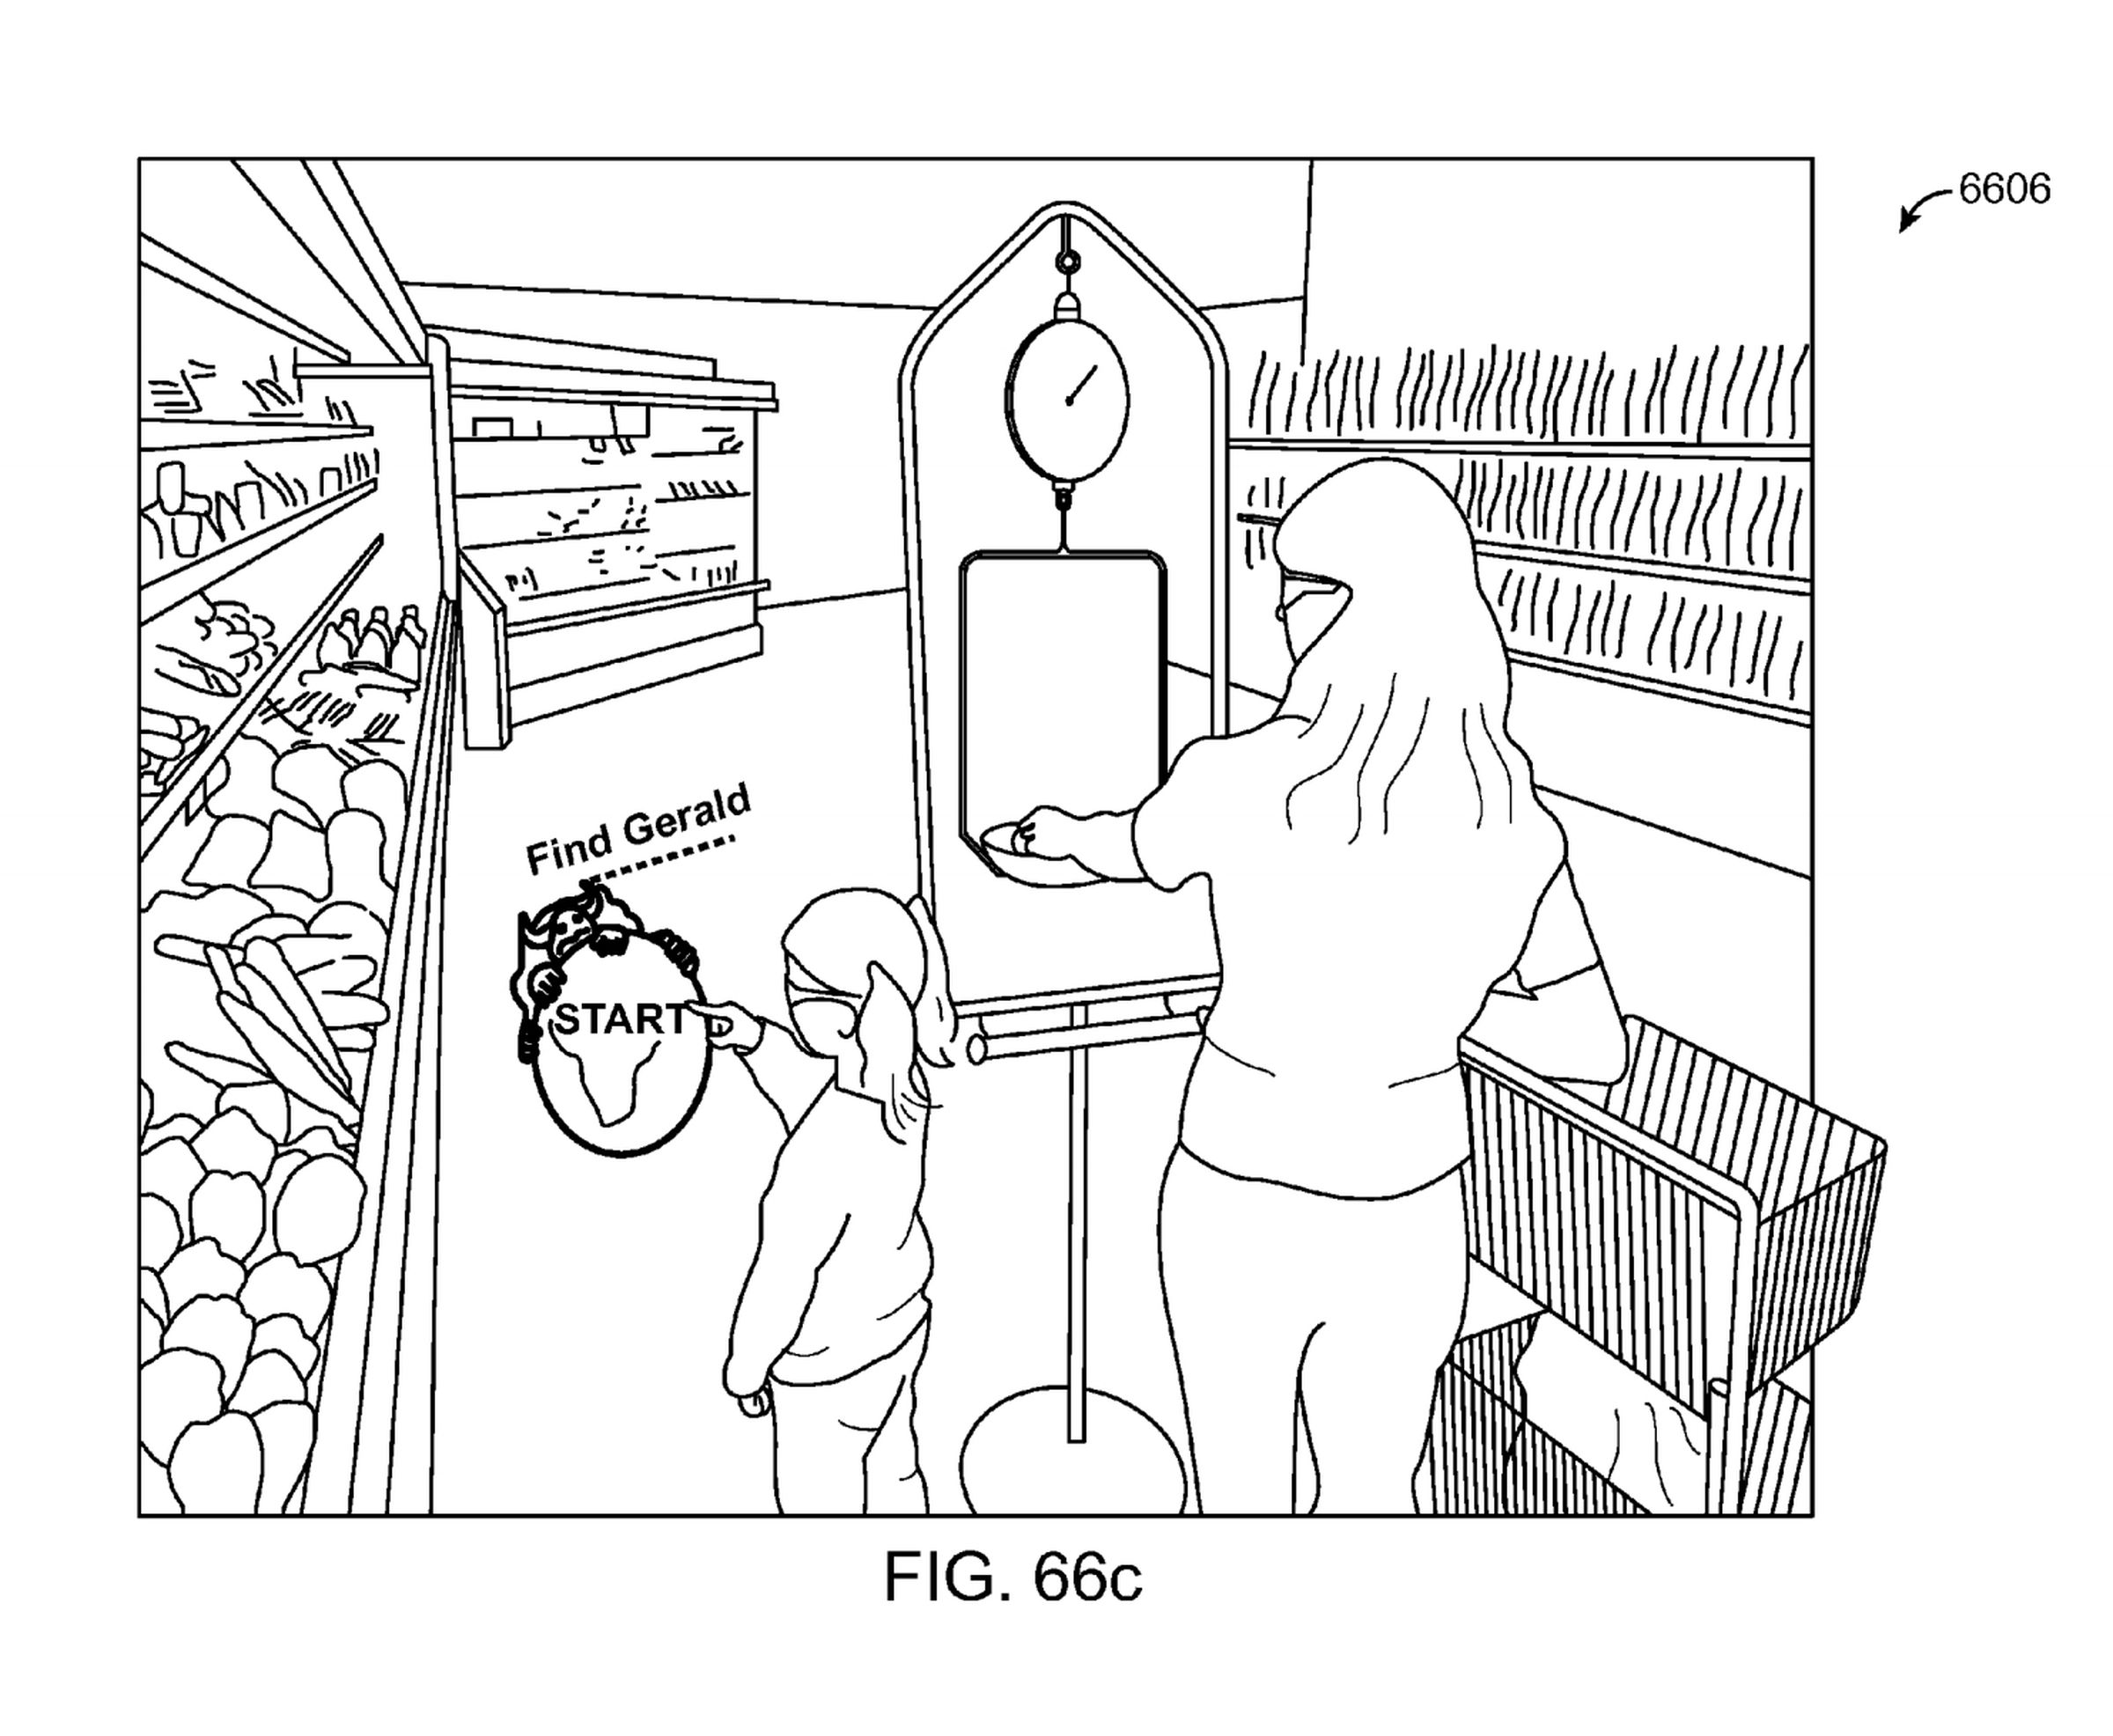 Google Magic Leap patents